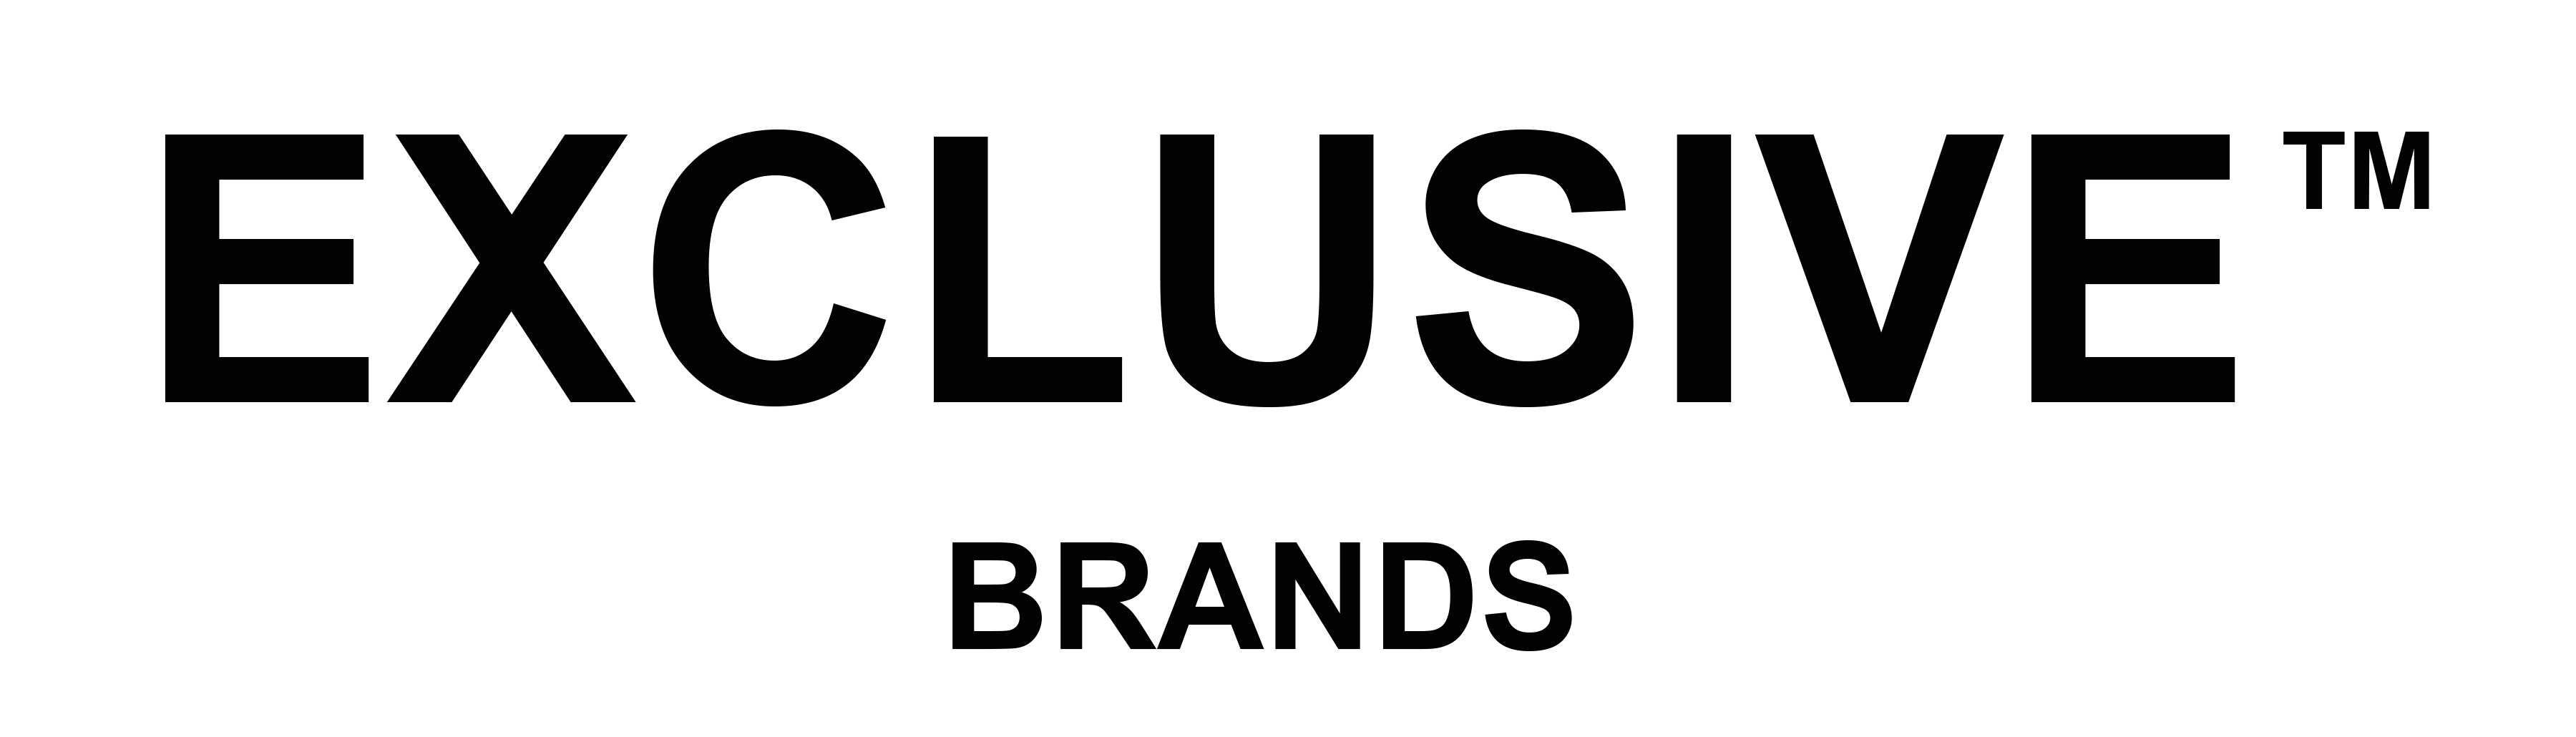 EXCLUSIVE-brands logo_black (1).png